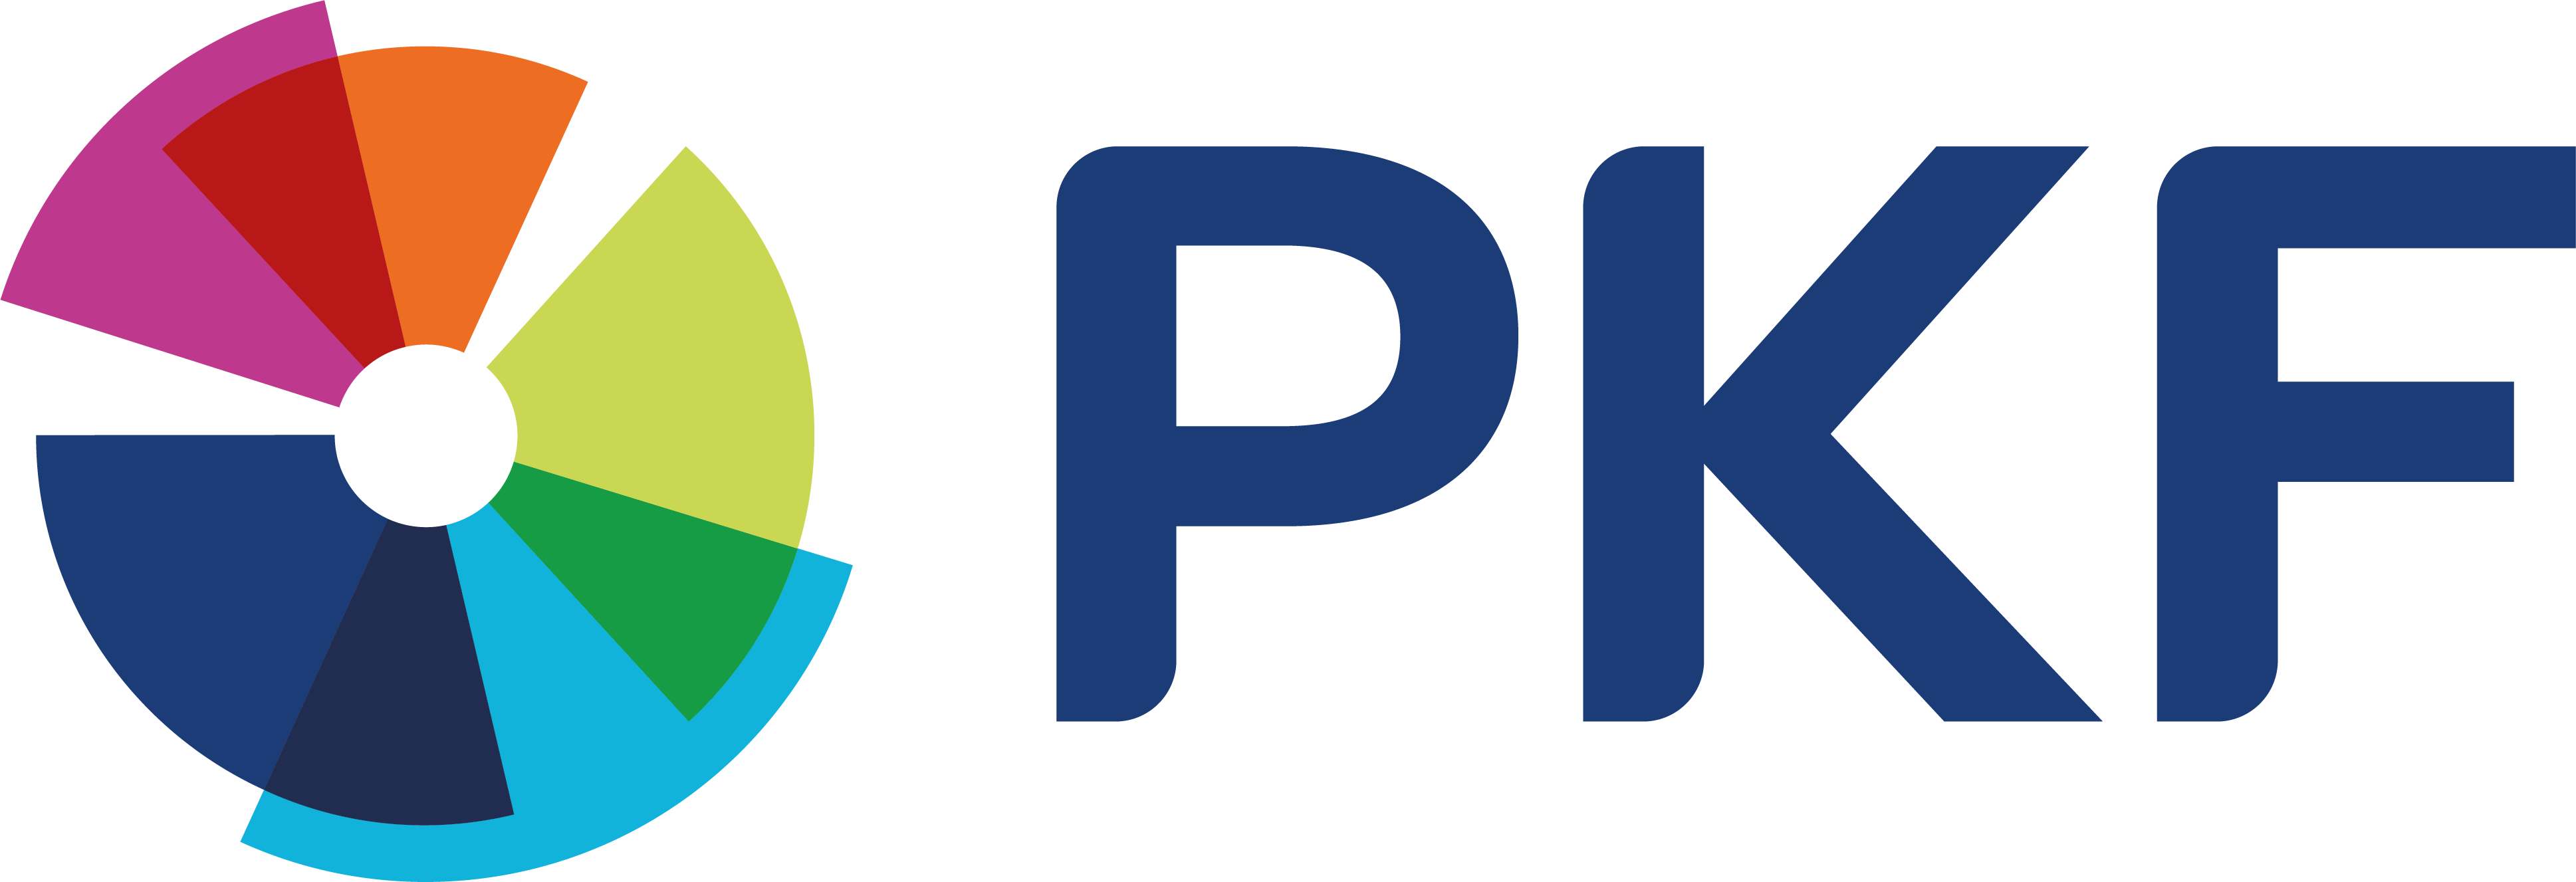 Pkf-cap Corporate Services Pte. Ltd. logo